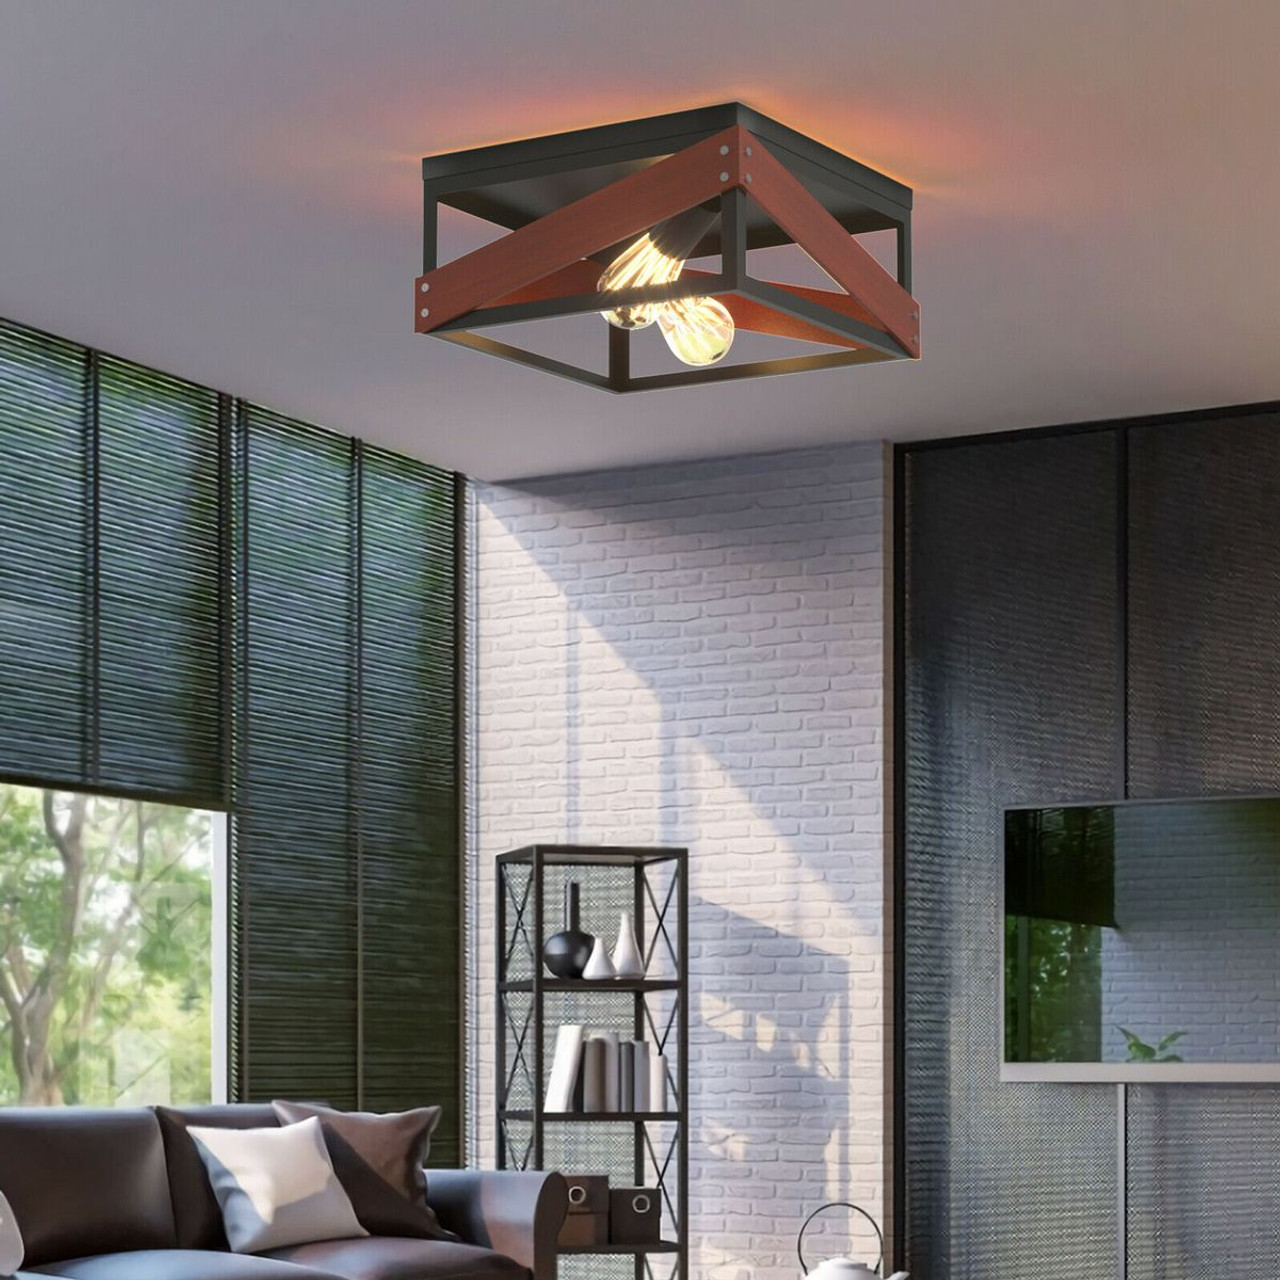 Adjustable Geometric Ceiling Lamp product image